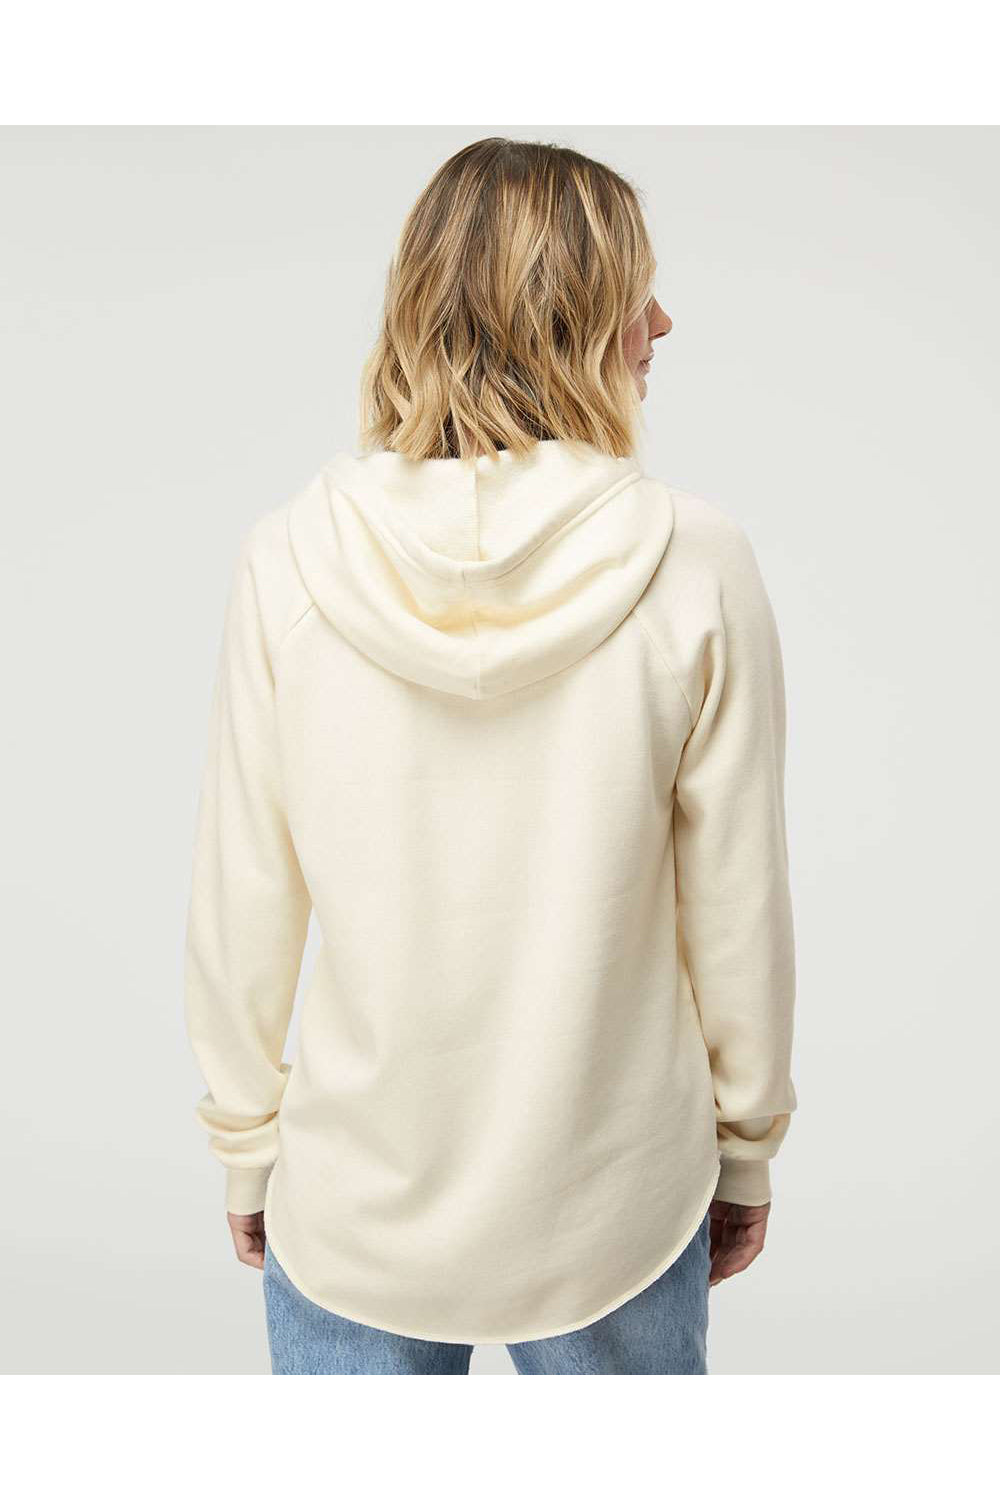 Independent Trading Co. PRM2500 Womens California Wave Wash Hooded Sweatshirt Hoodie Bone Model Back